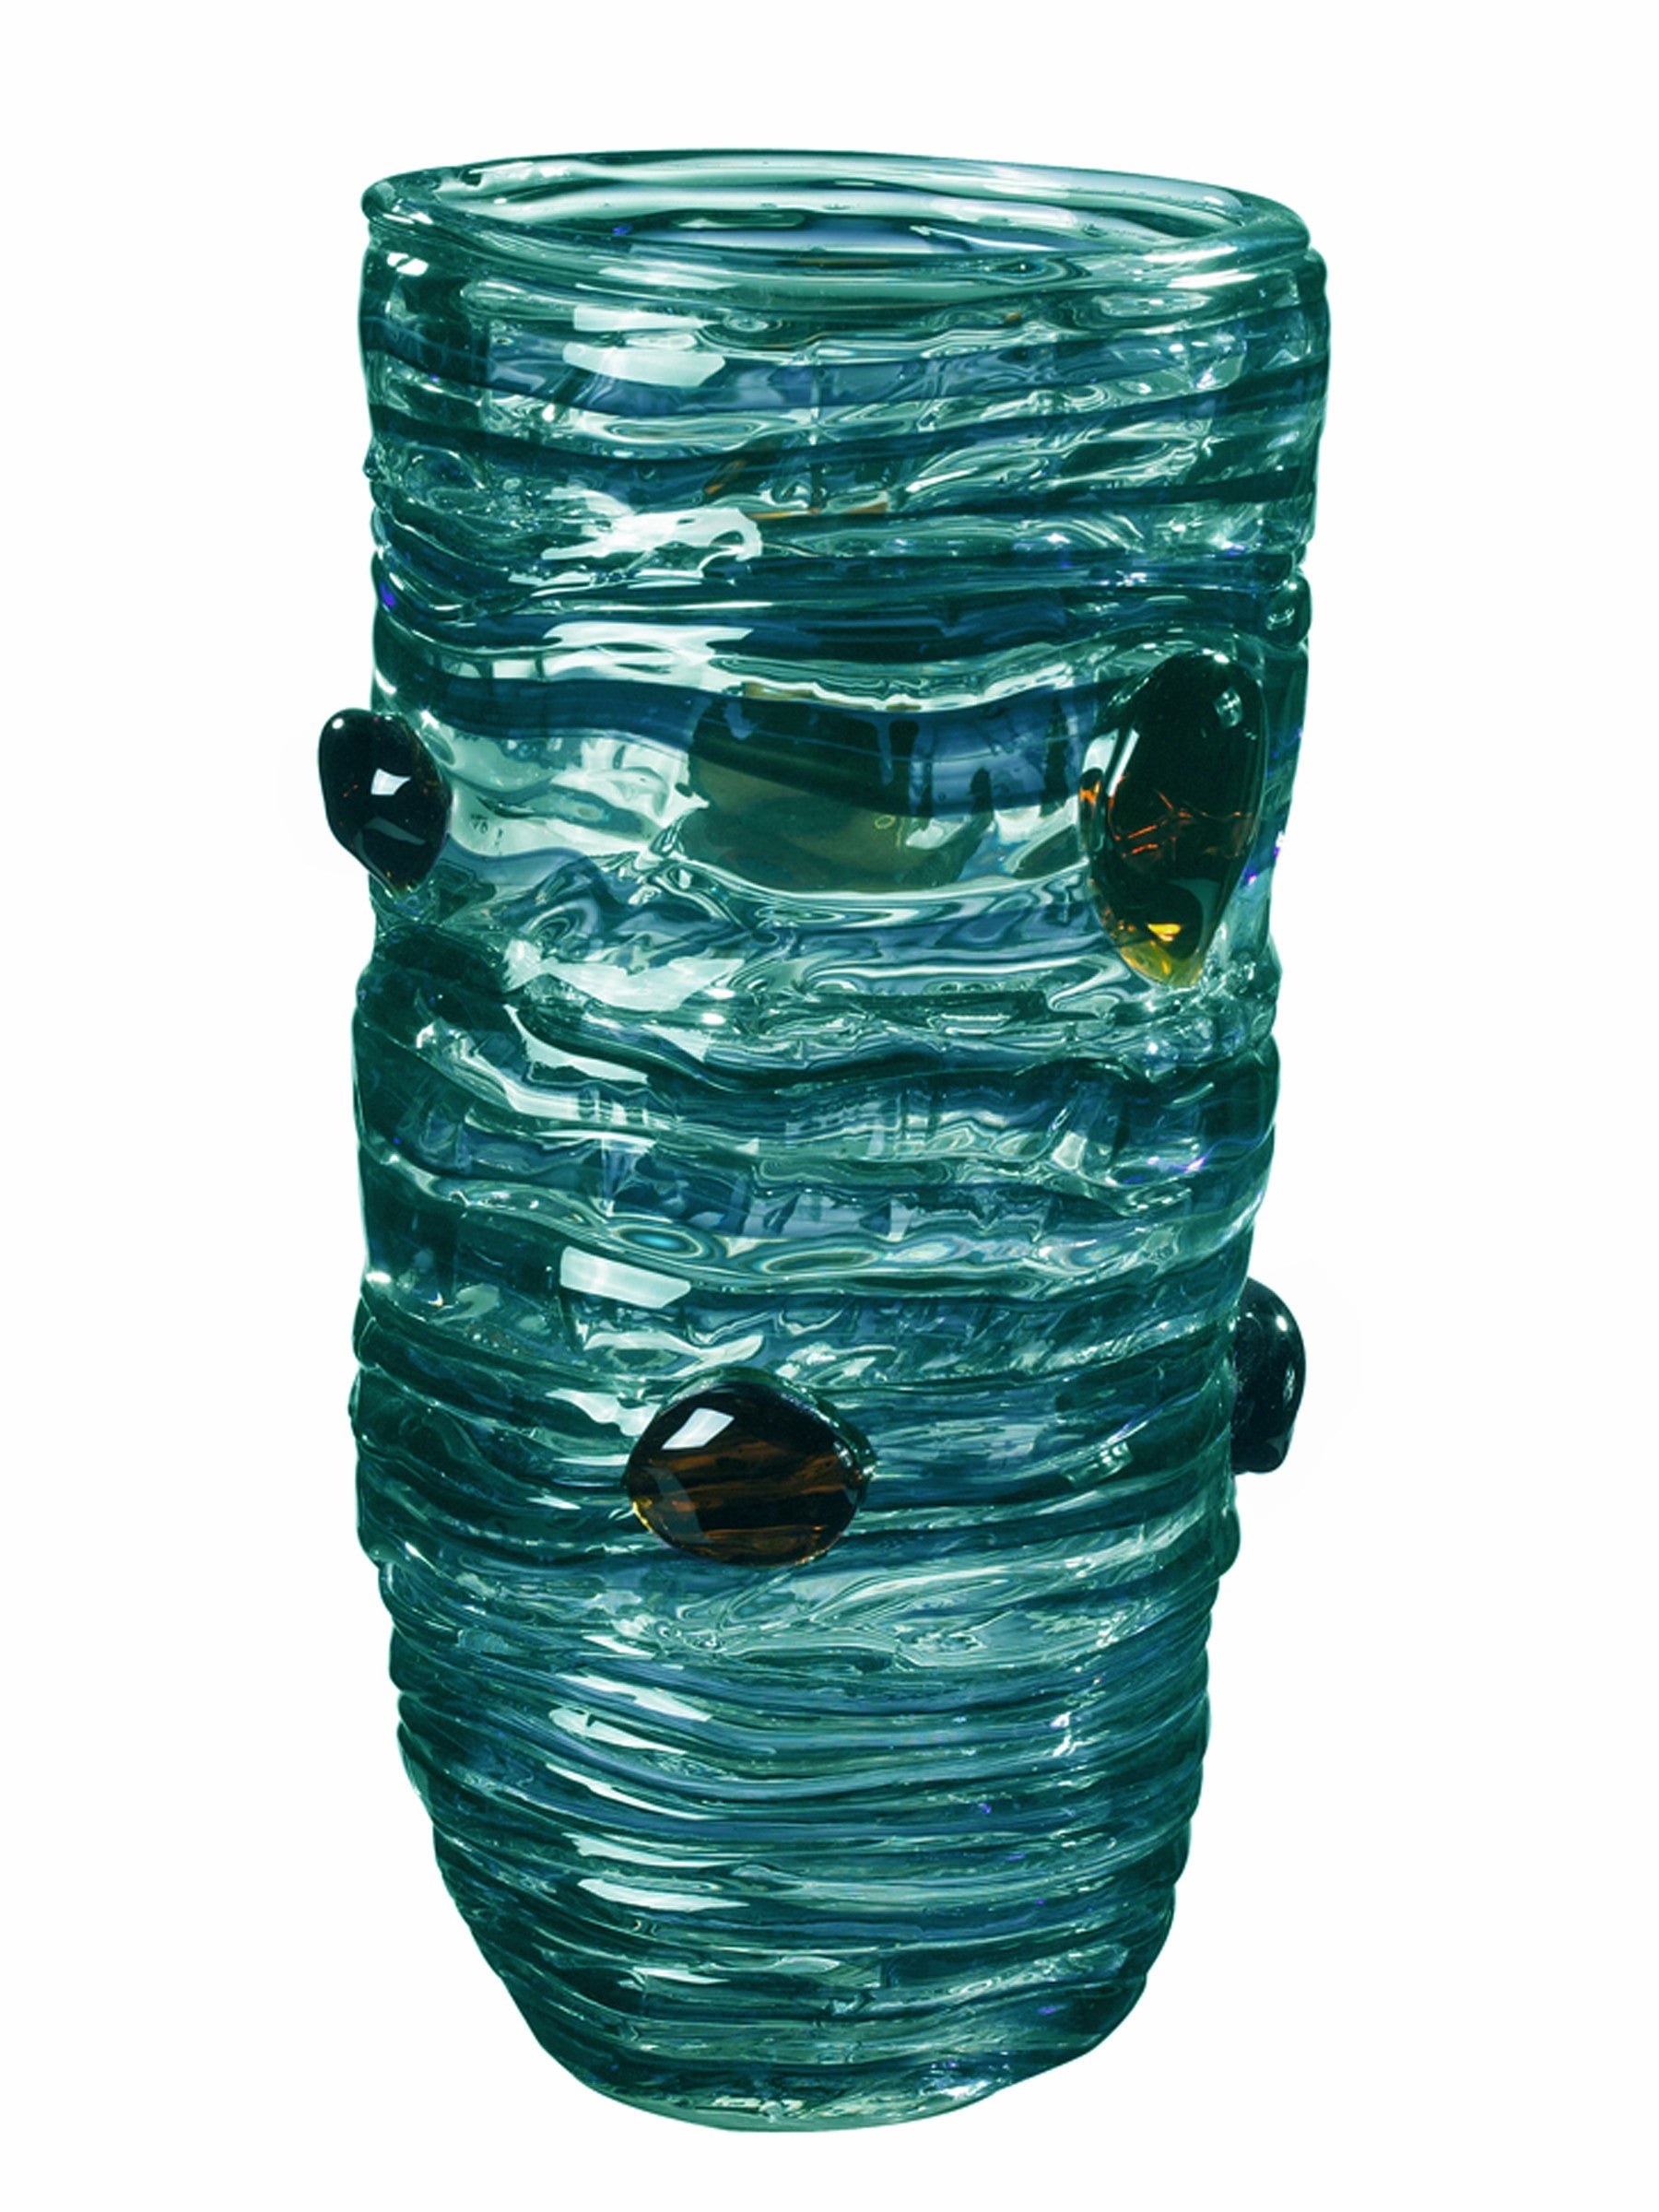 Dale Tiffany AV13154 Accessories/Vases Home Decor Blue